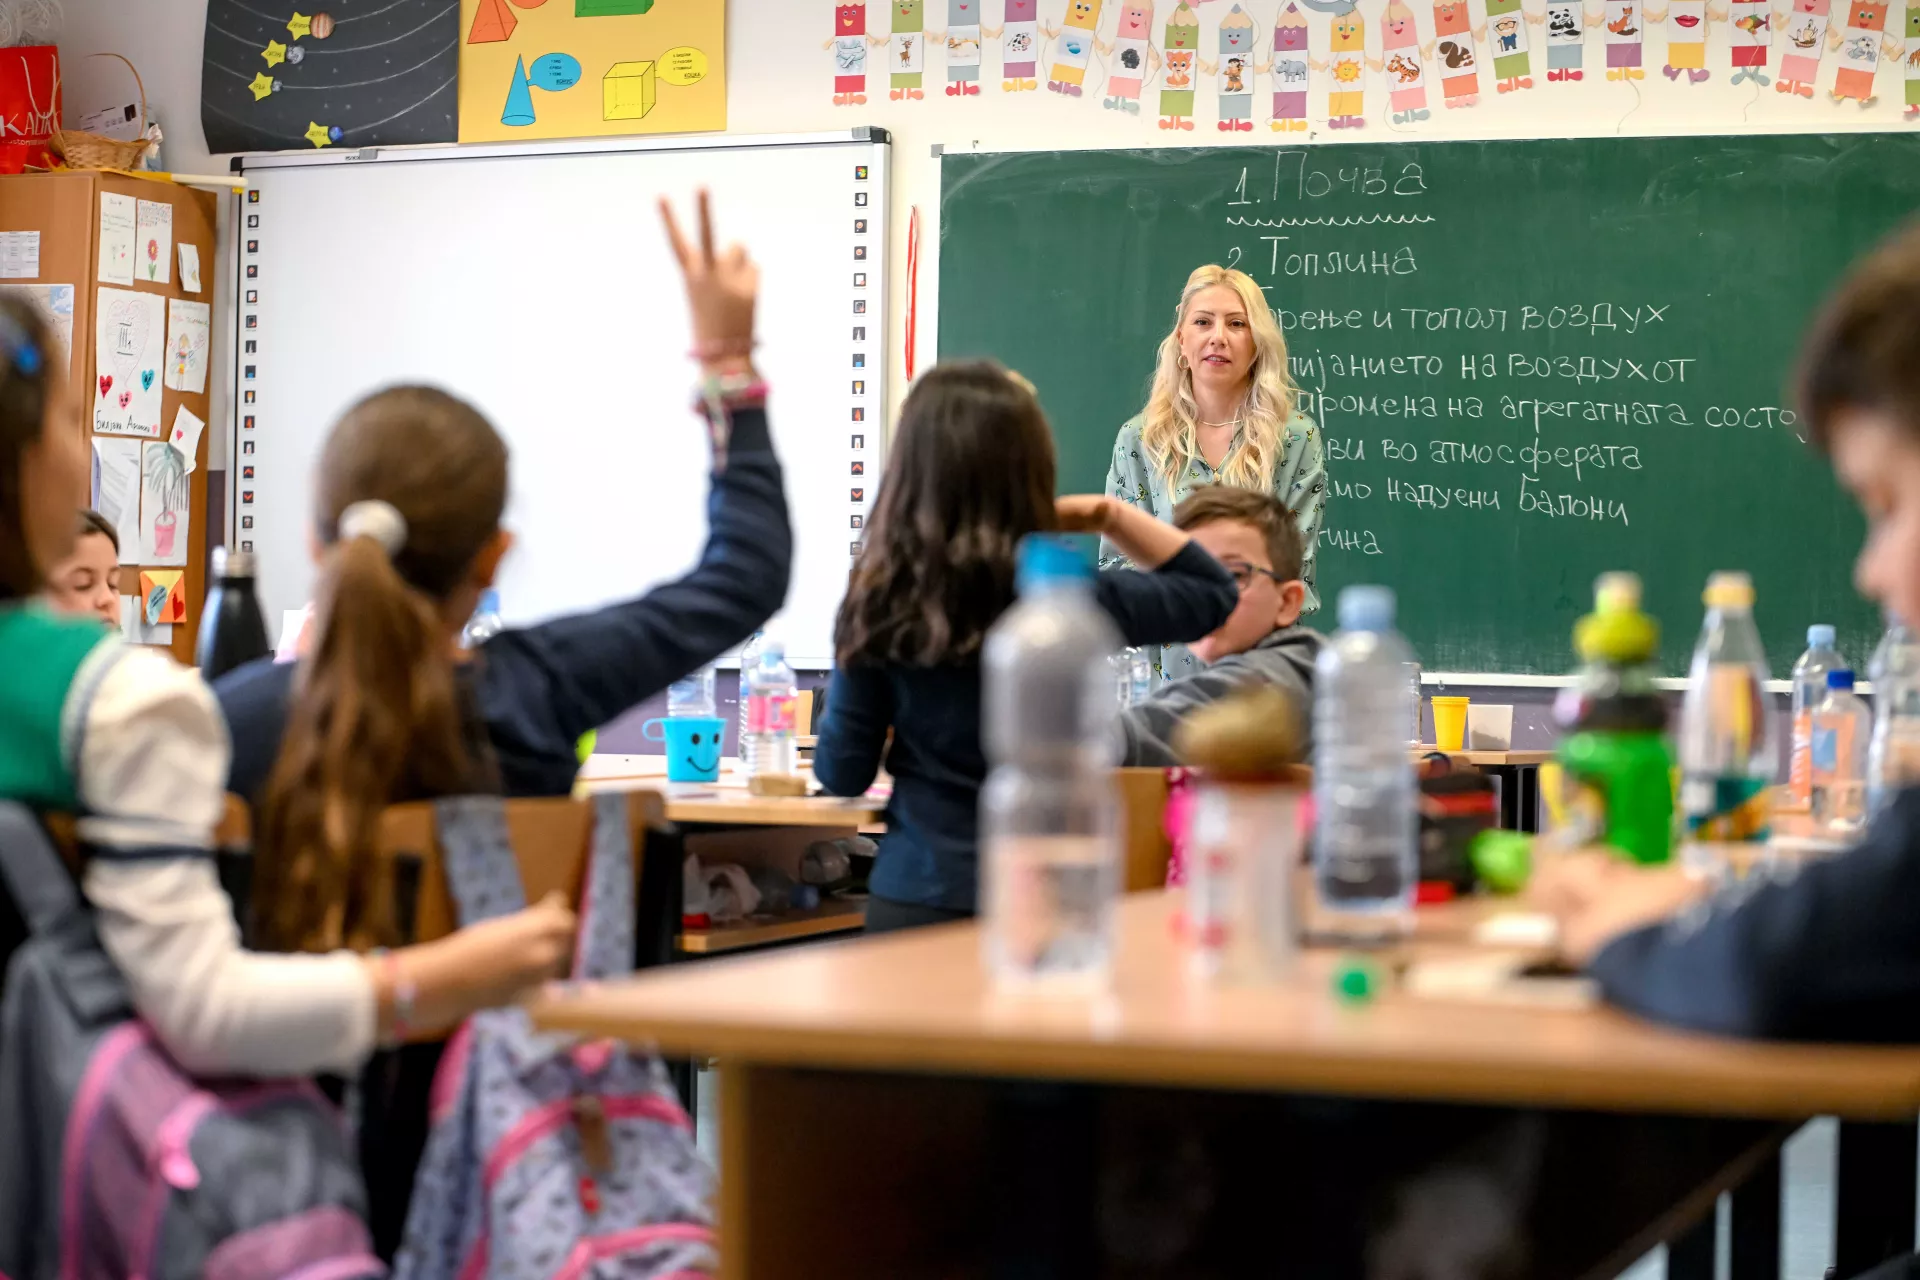 Child raising hand in classroom 